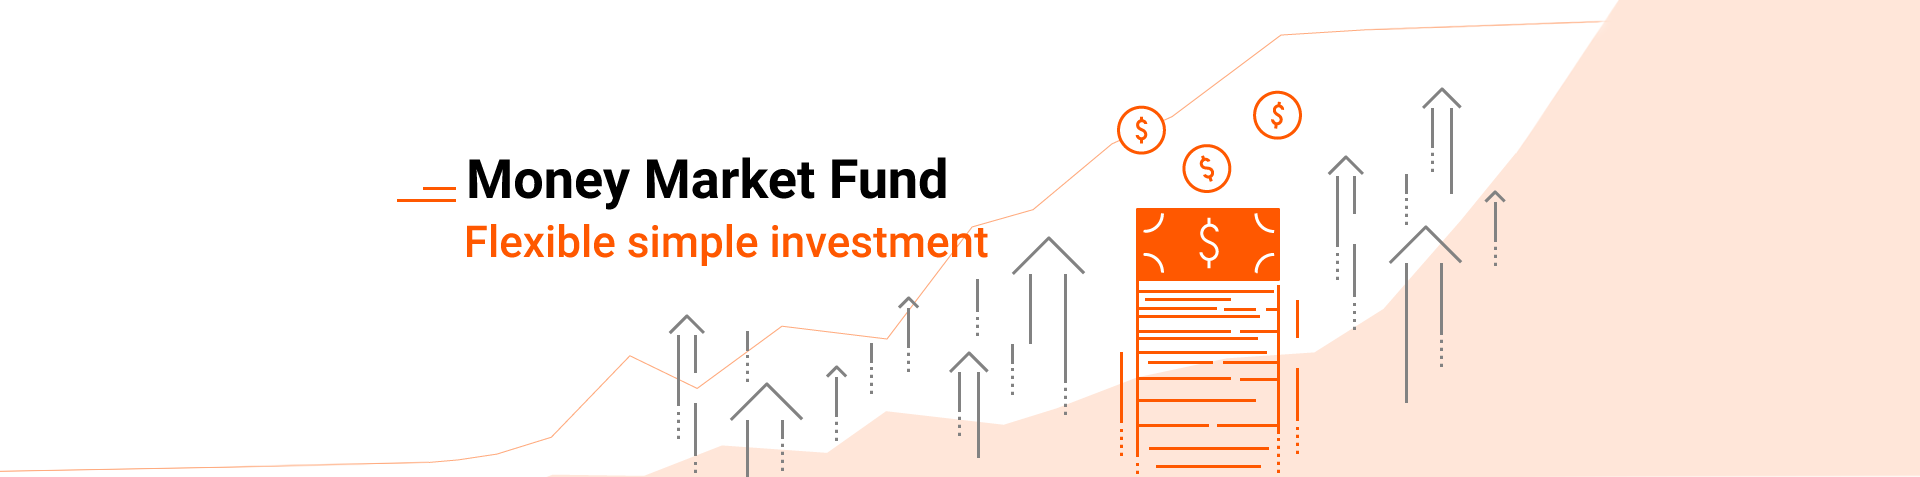 Money Market Fund - Flexible simple investment